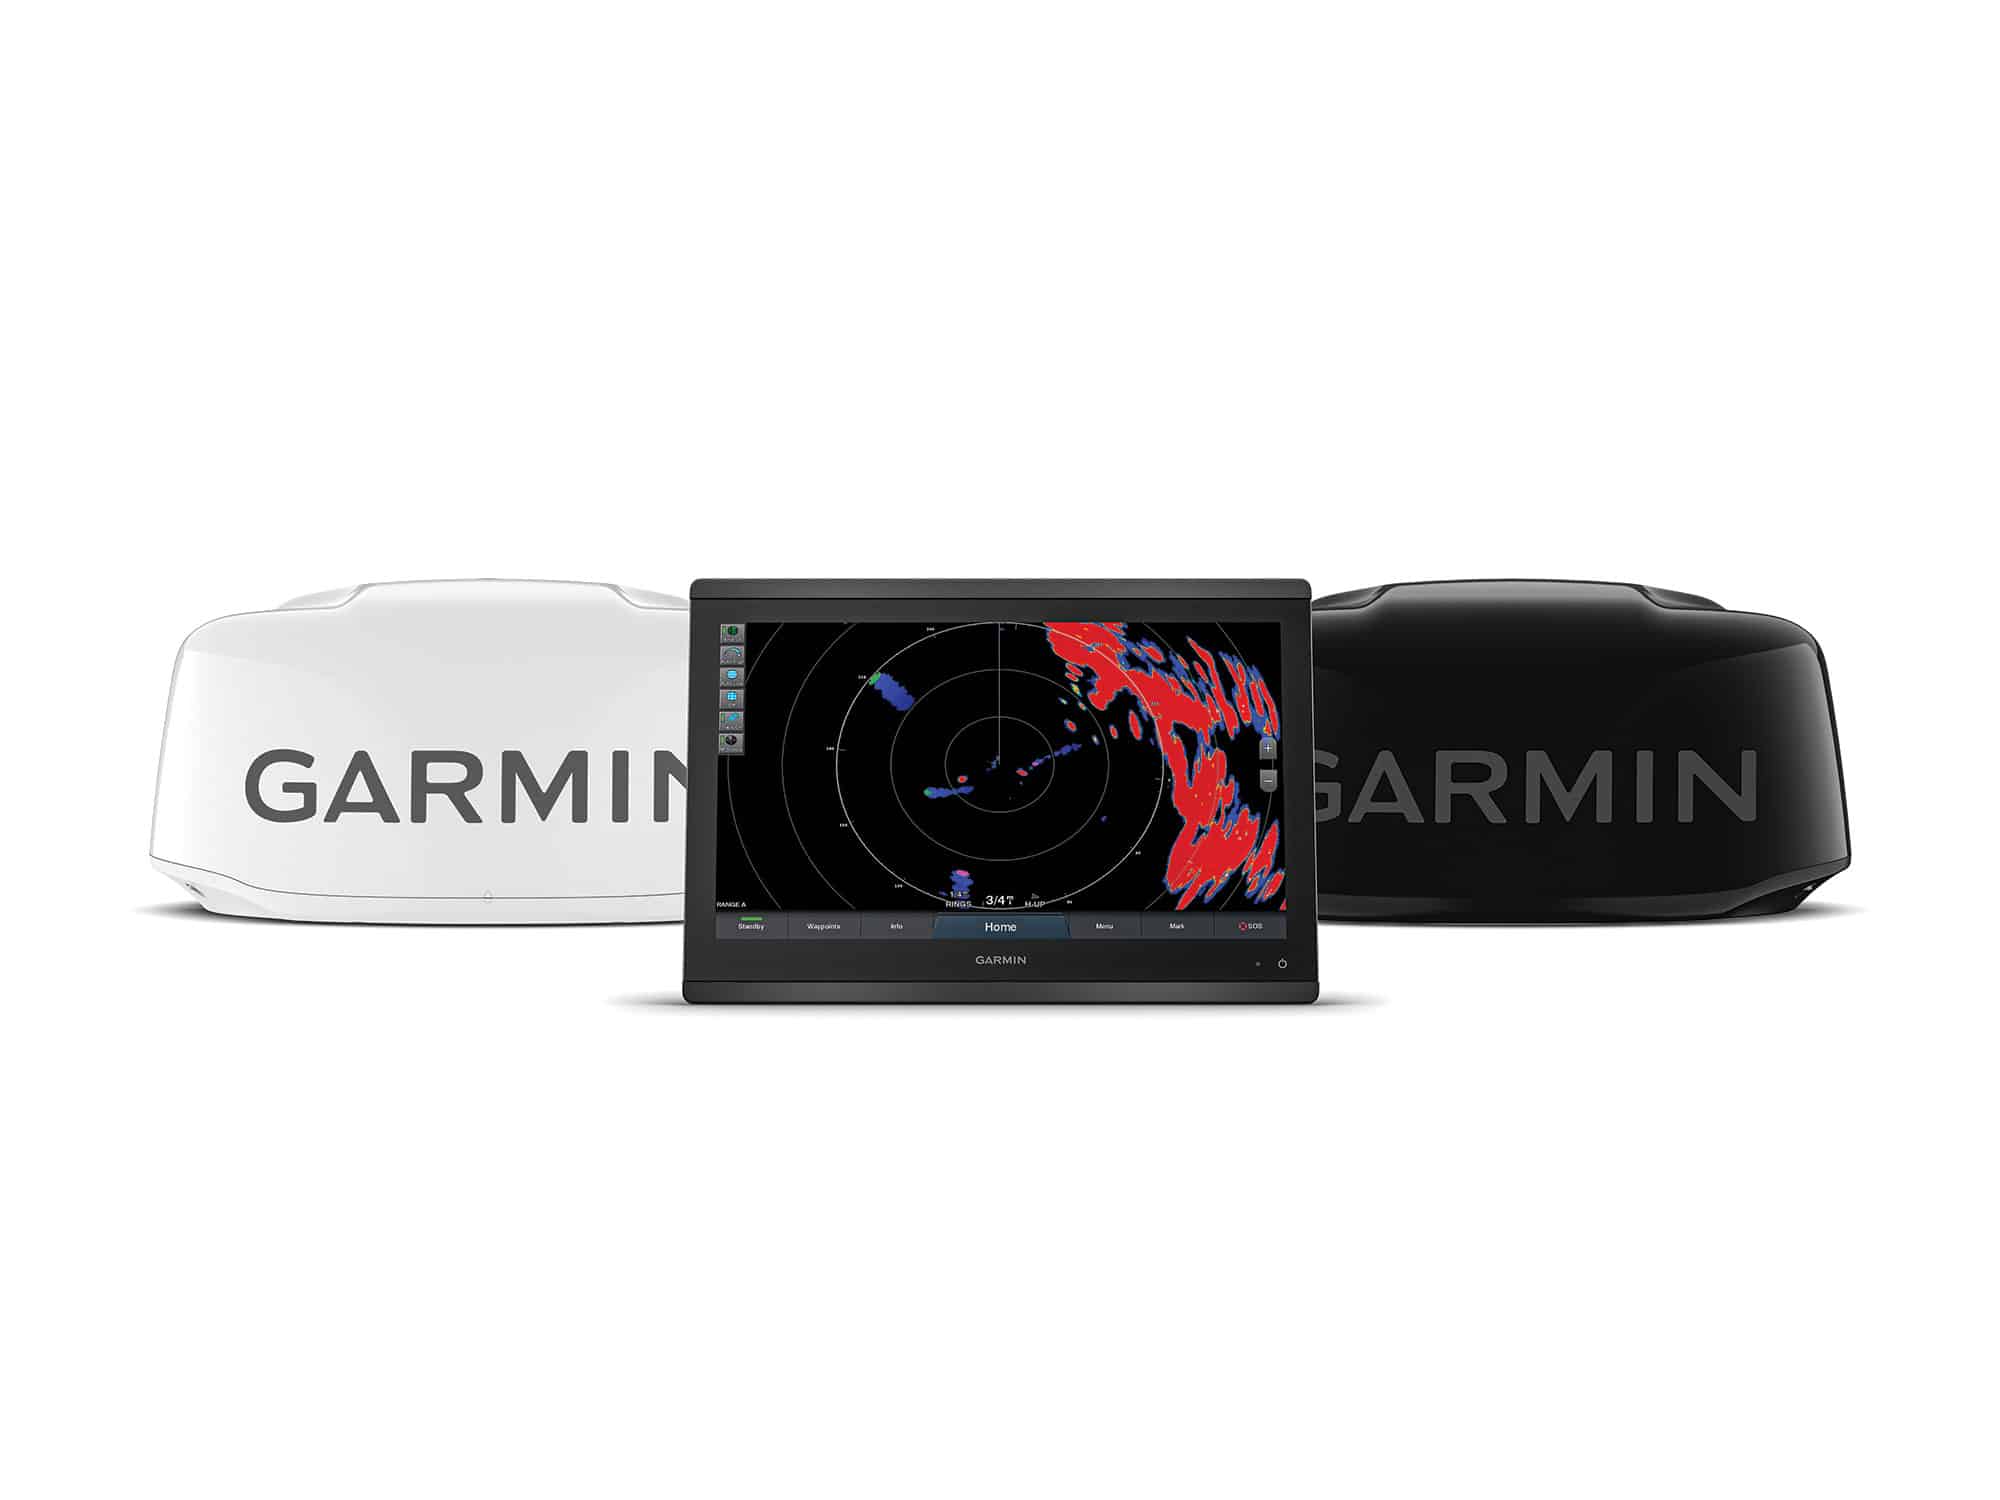 New Garmin Dome Radars